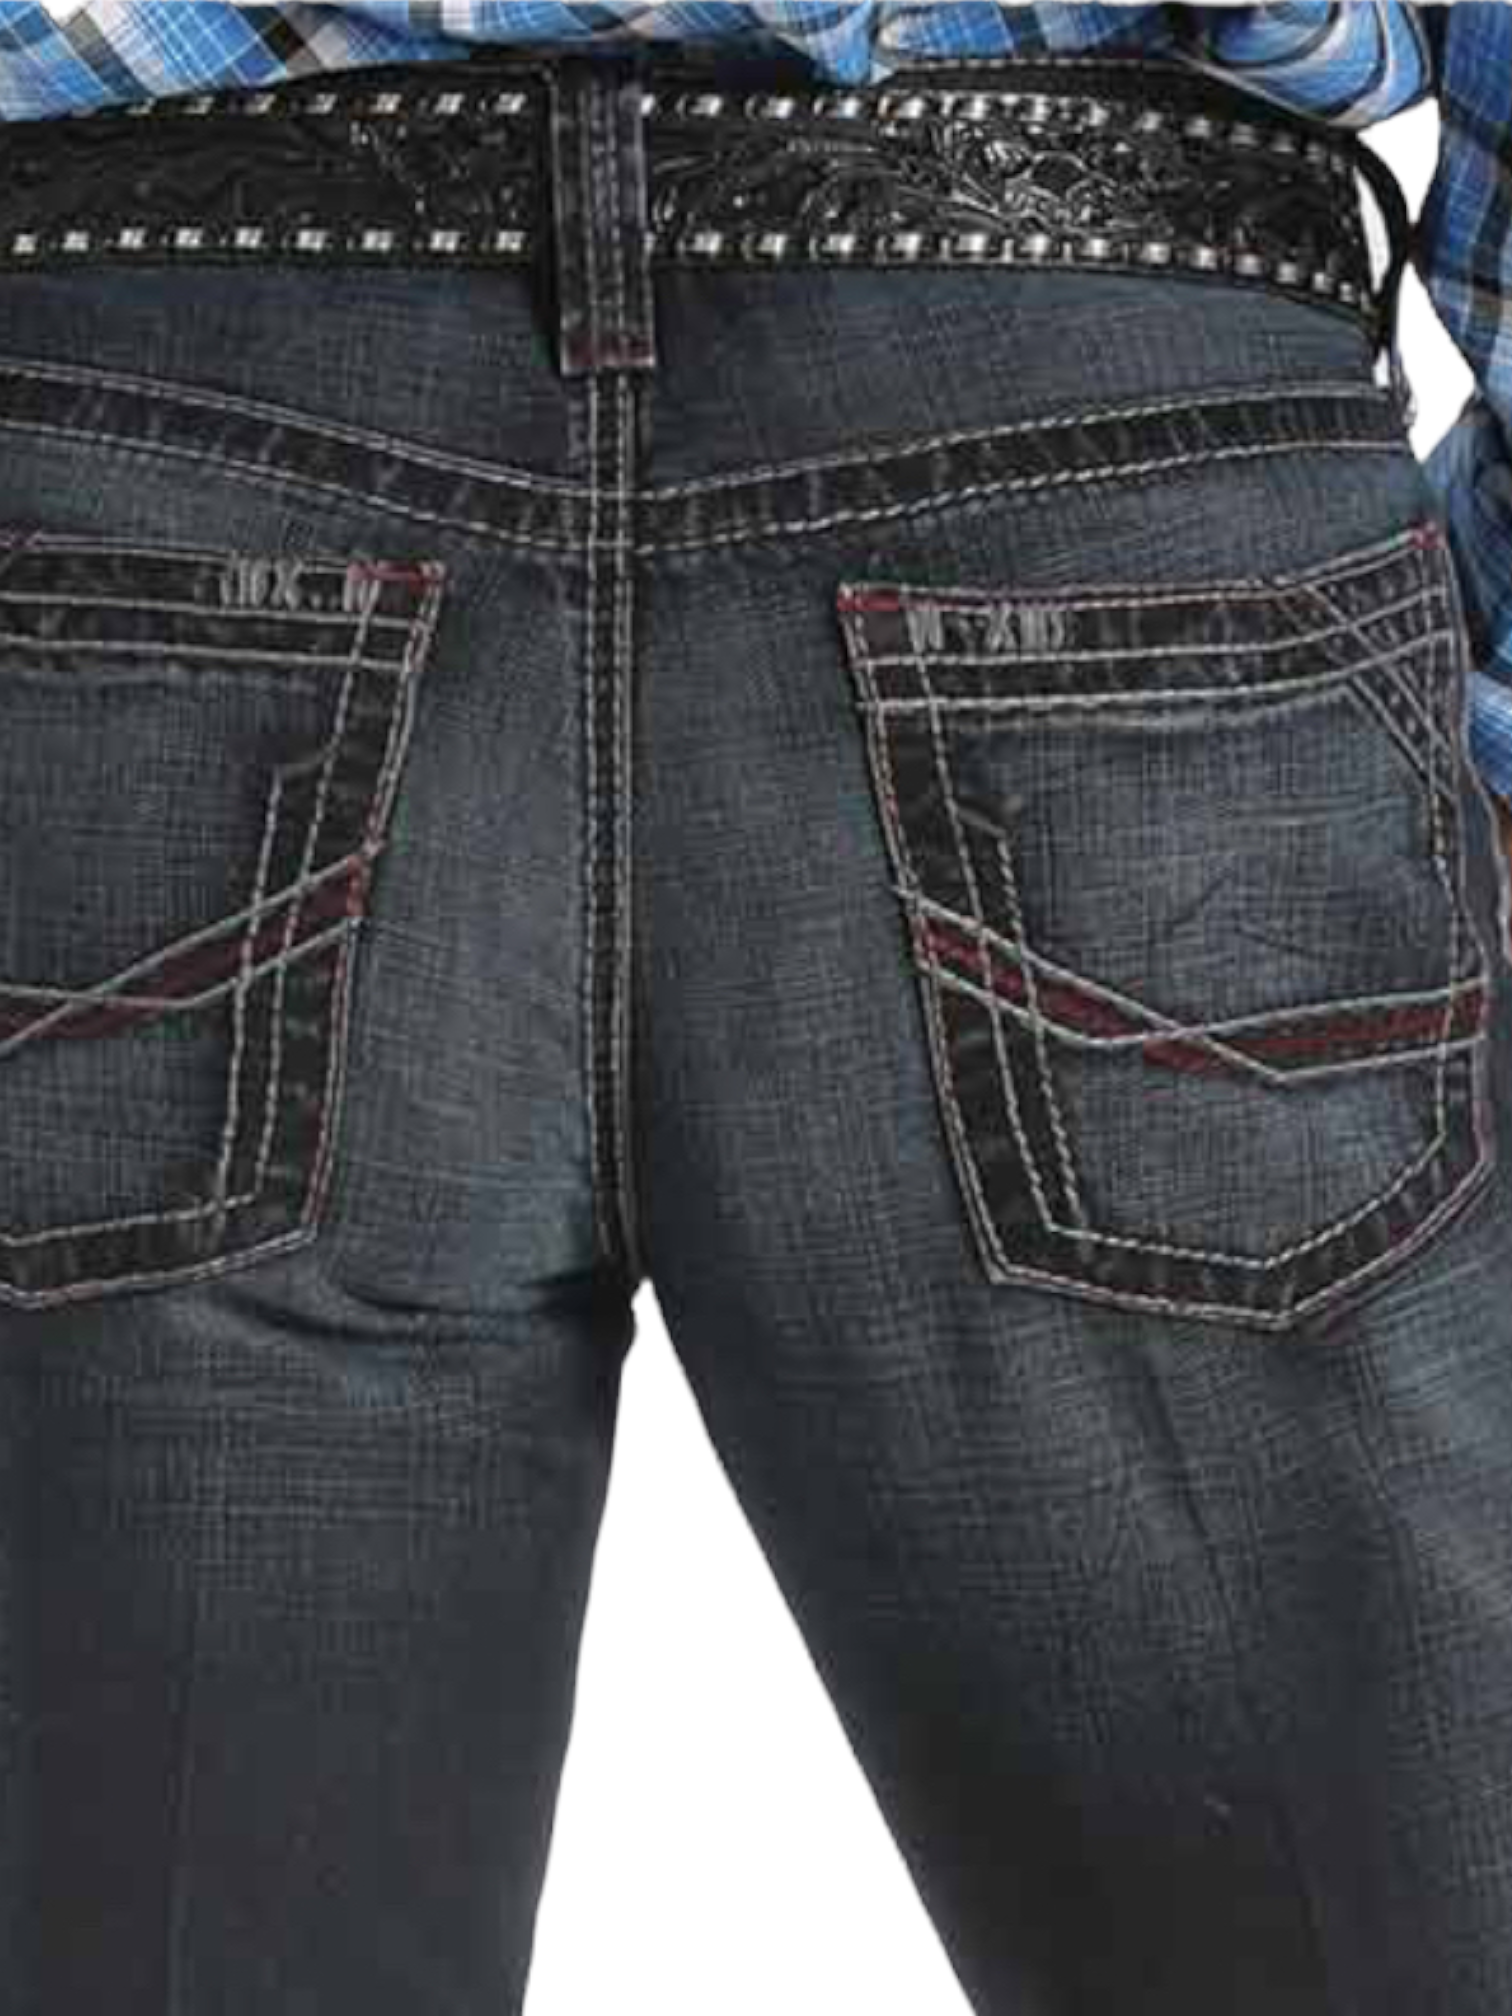 Ian Dark Wash Denim Jeans